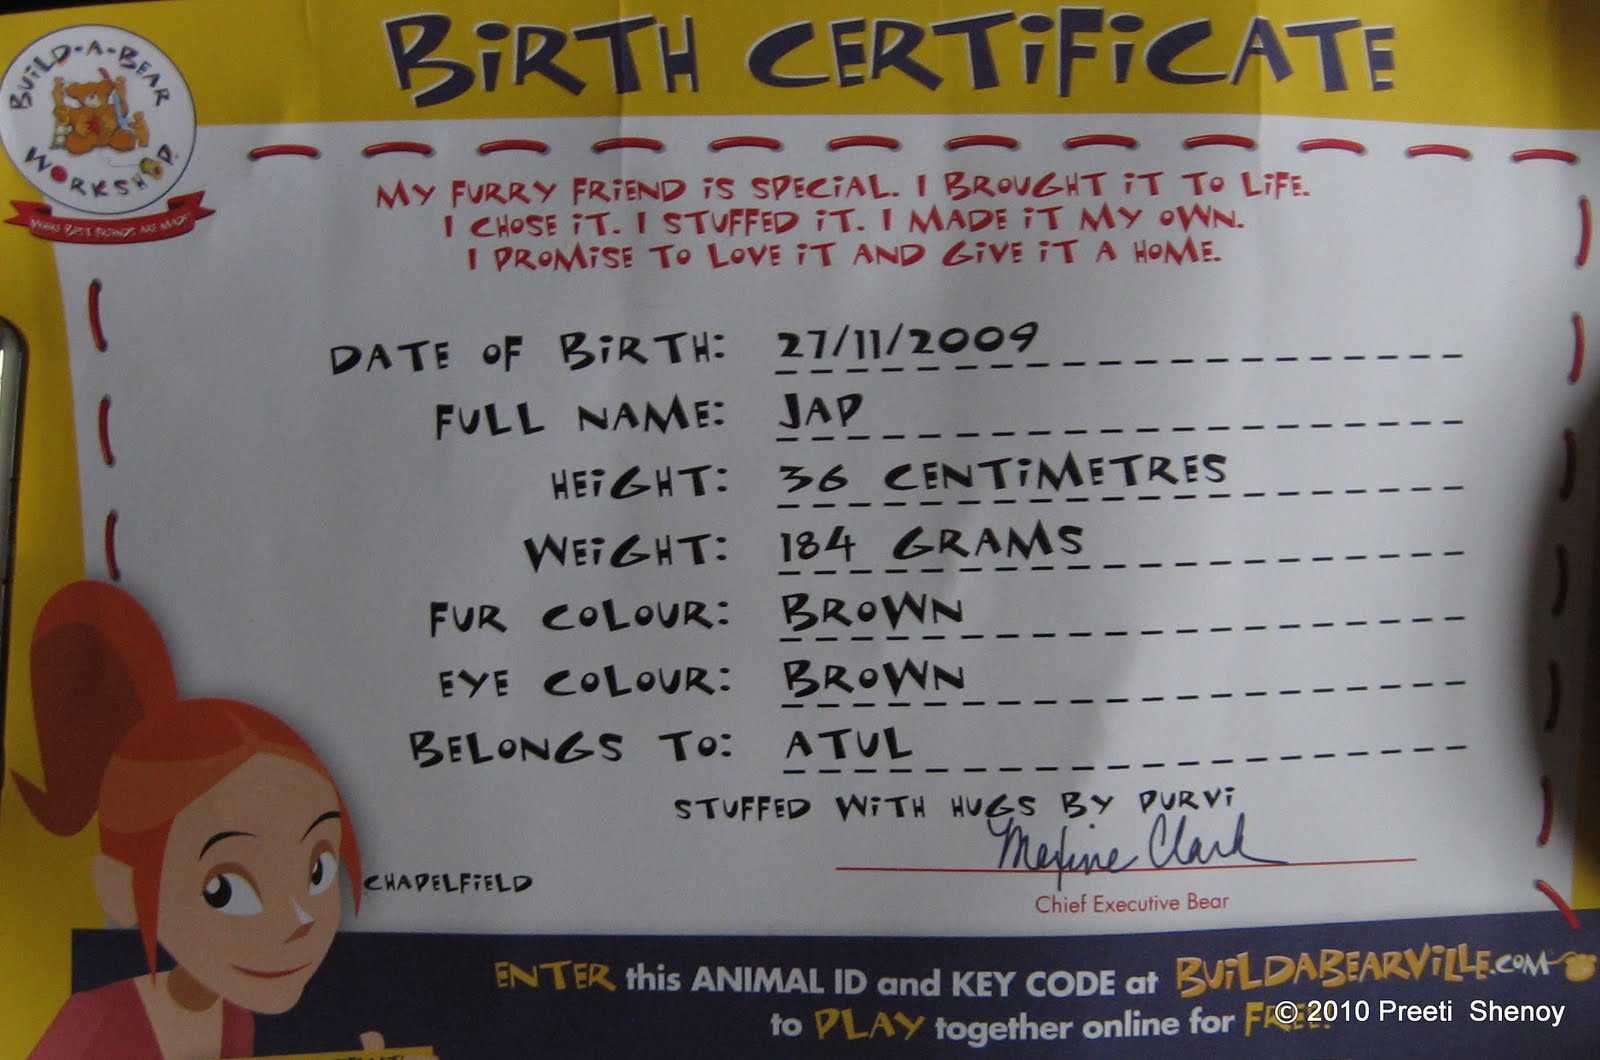 Winni And Jap (Blog Marathon Post 17) Pertaining To Build A Bear Birth Certificate Template